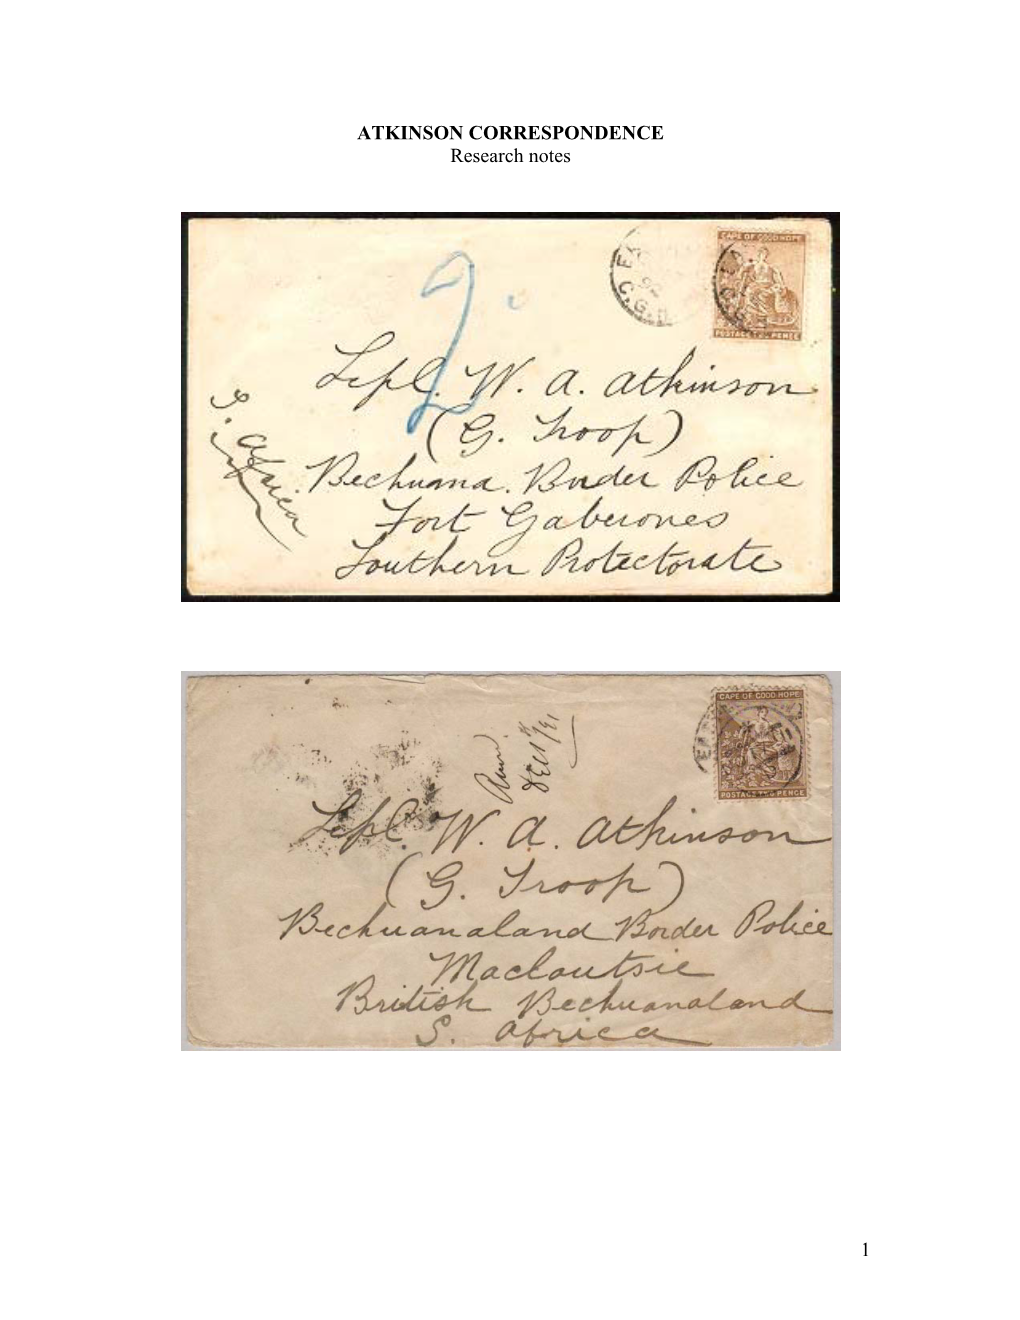 Atkinson Correspondence: Research Notes